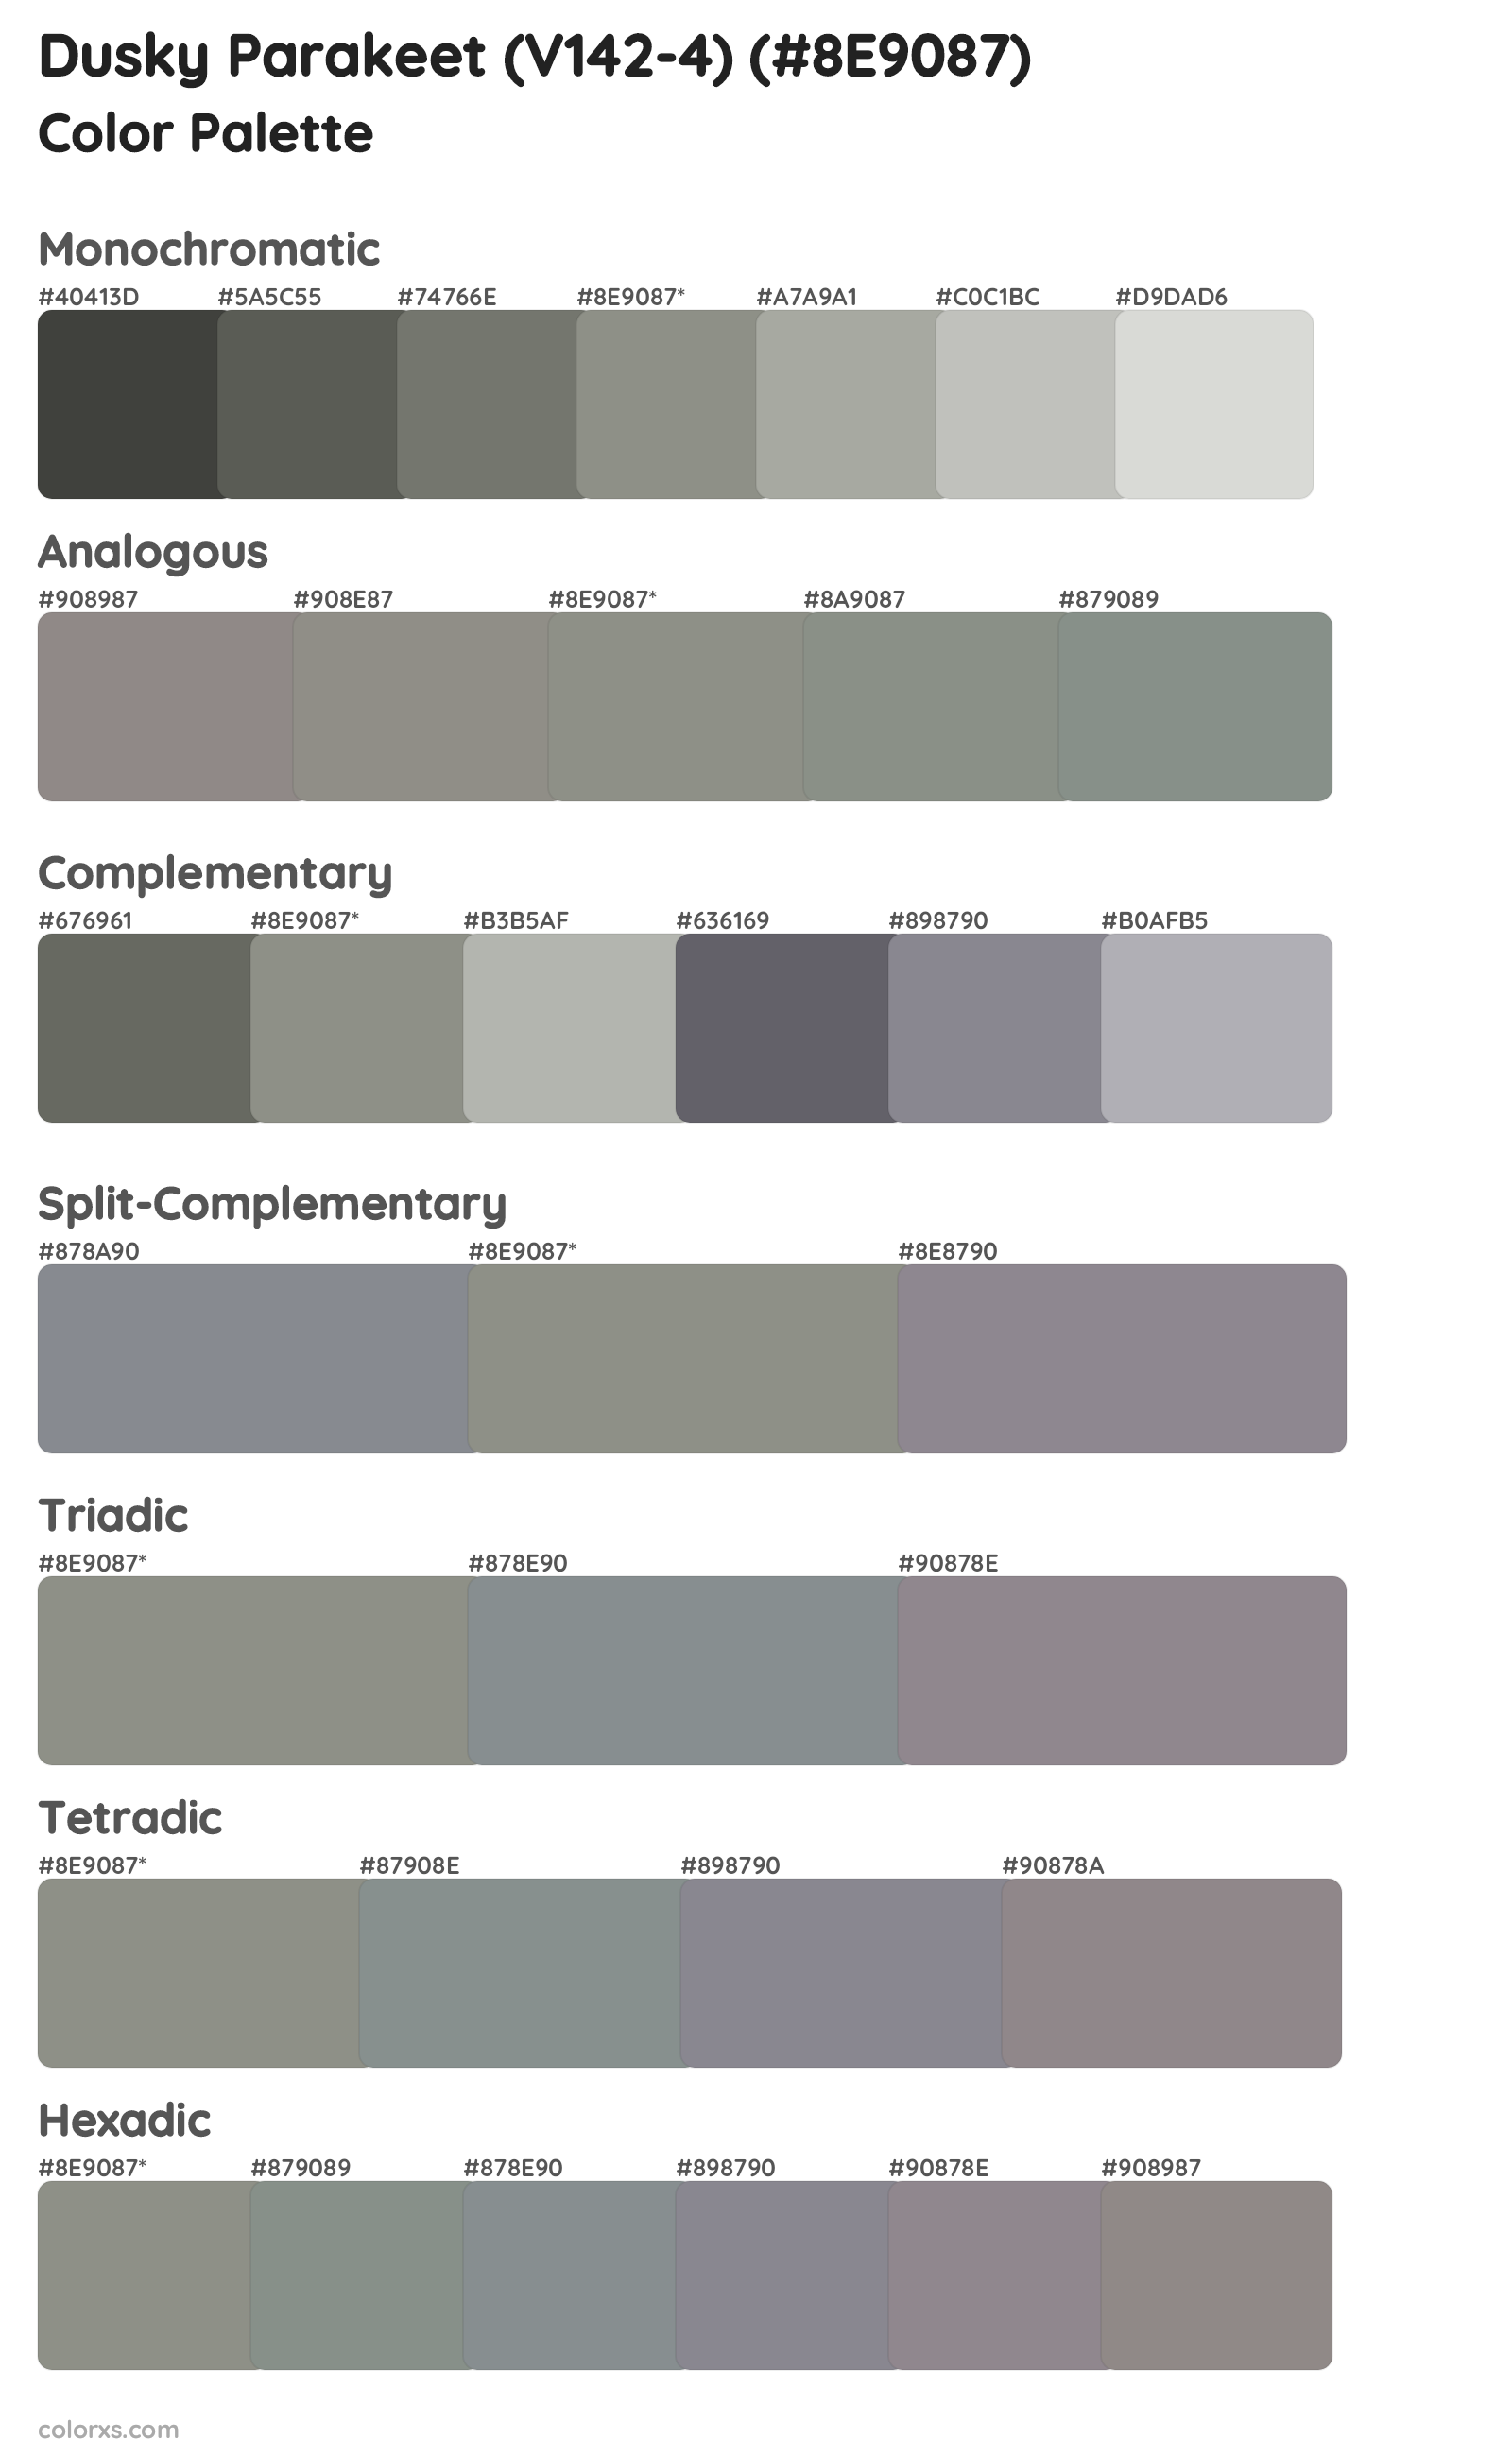 Dusky Parakeet (V142-4) Color Scheme Palettes